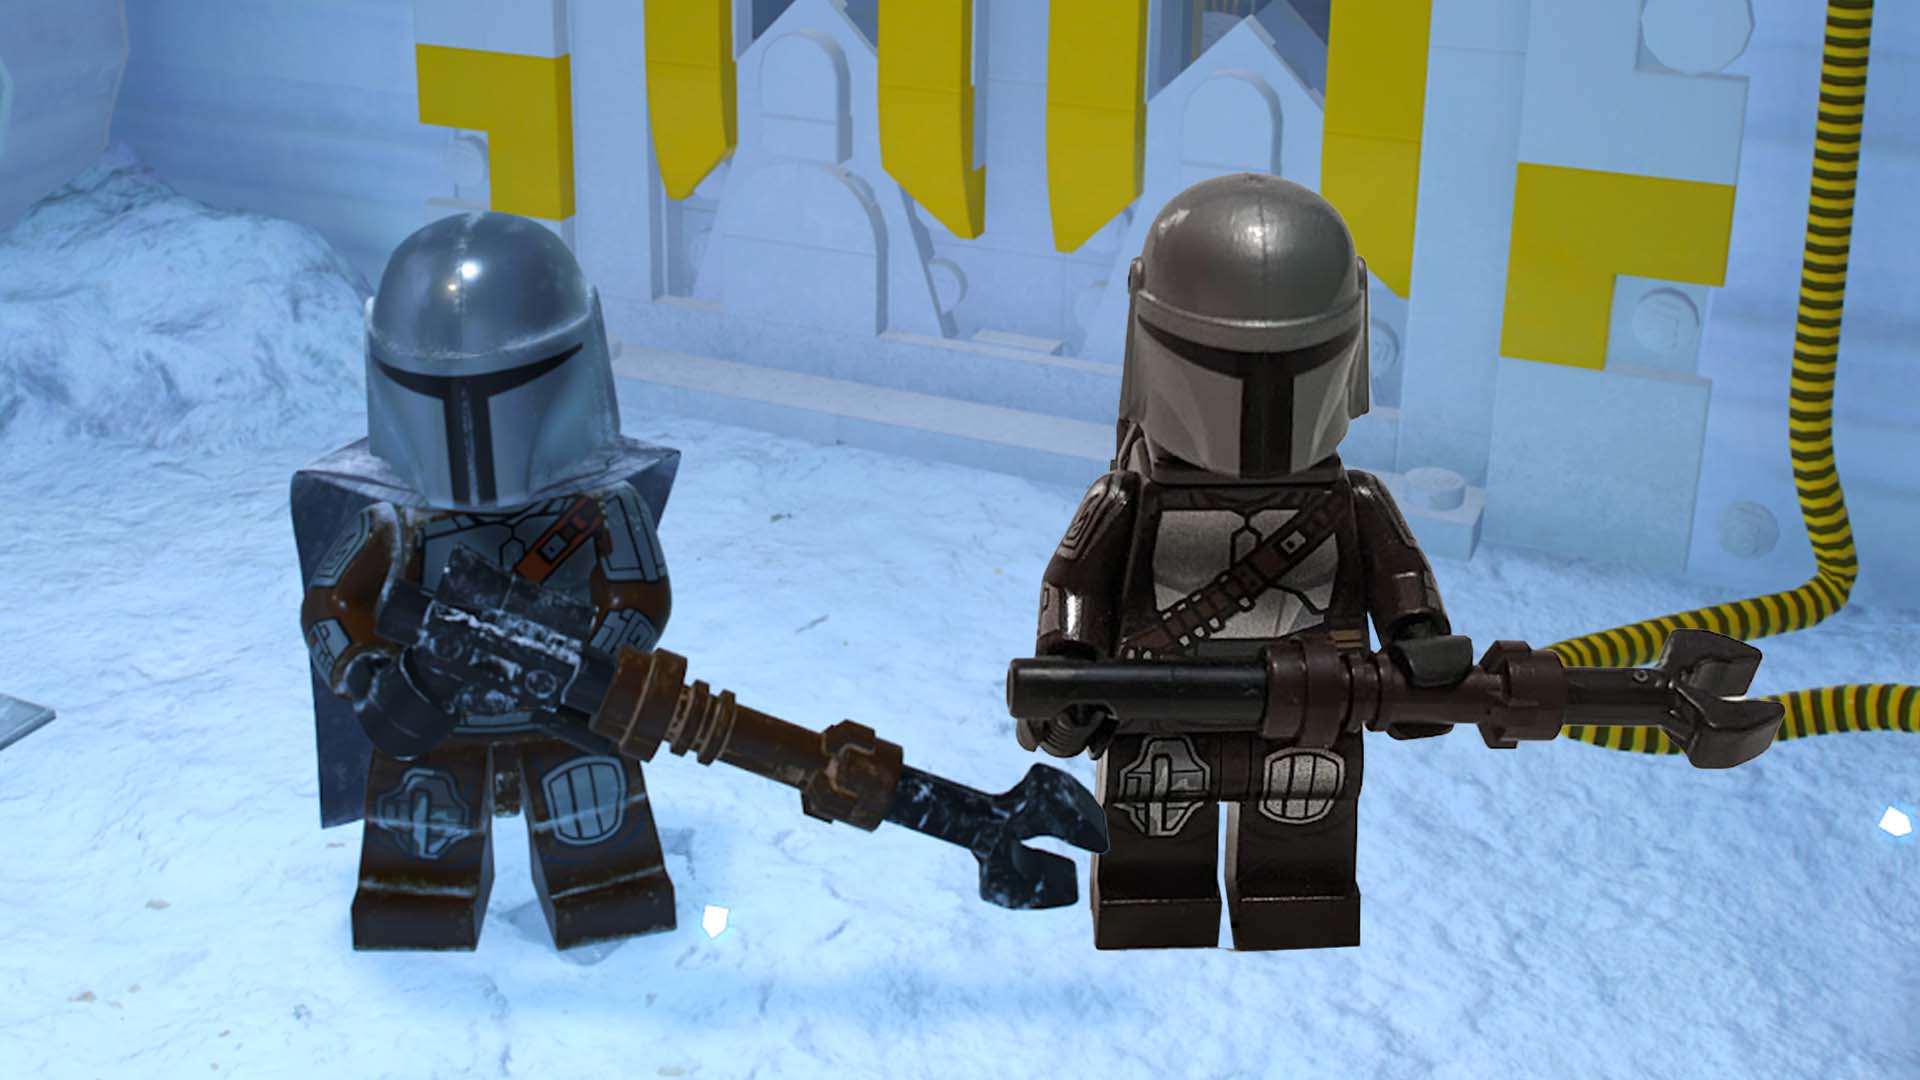 Image: Lego / Lucasfilm / Kotaku